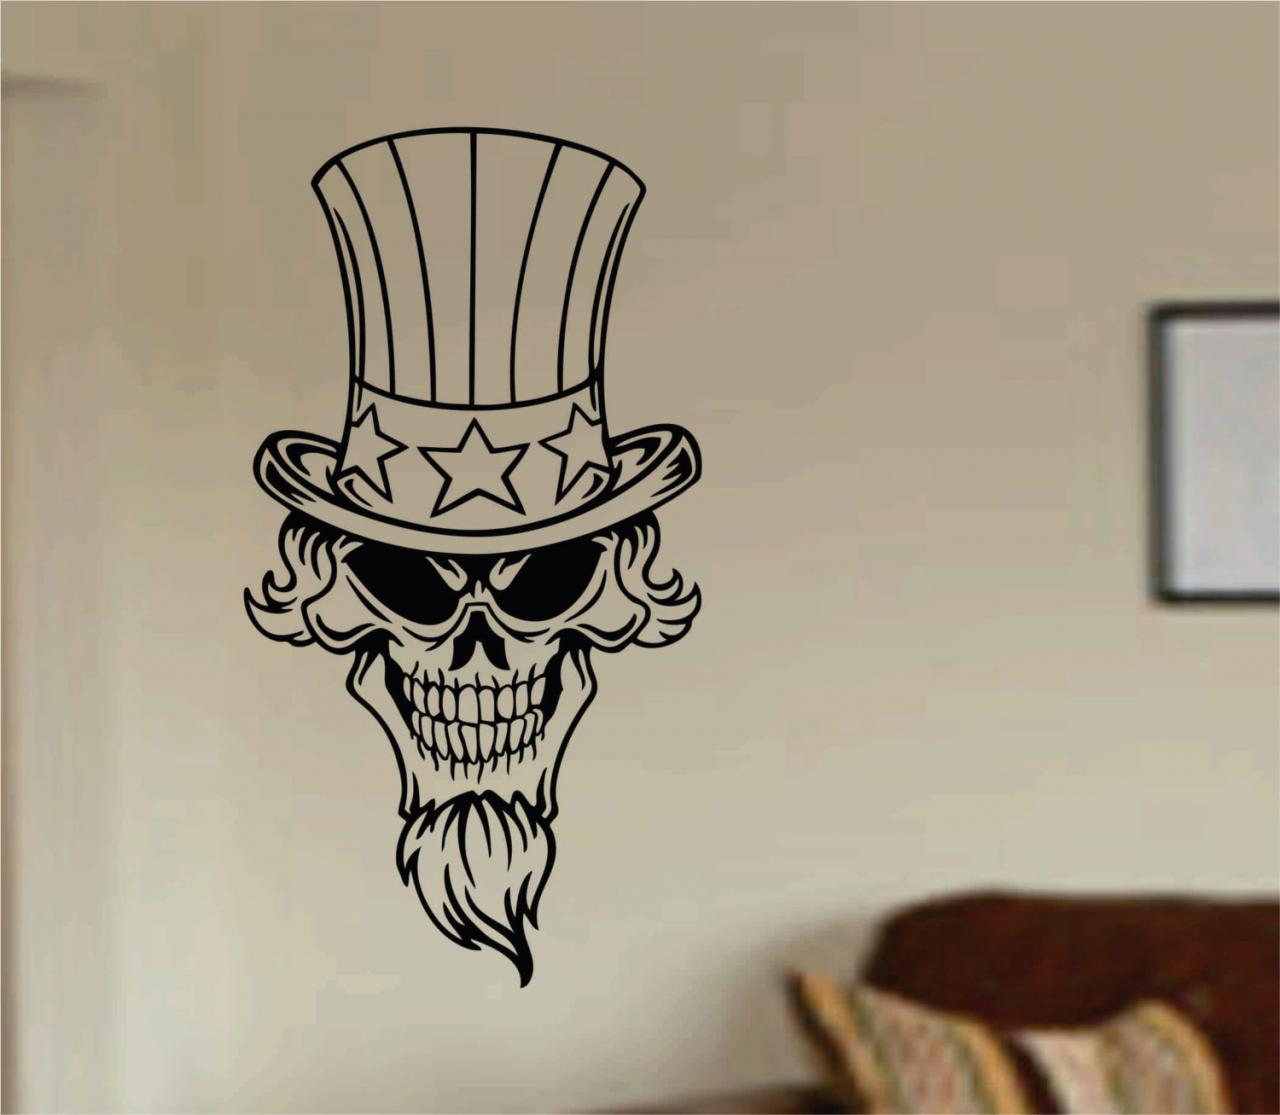 Patriotic Skull Wall Vinyl Decal Sticker Art Graphic Sticker USA 4th of July America Murrica